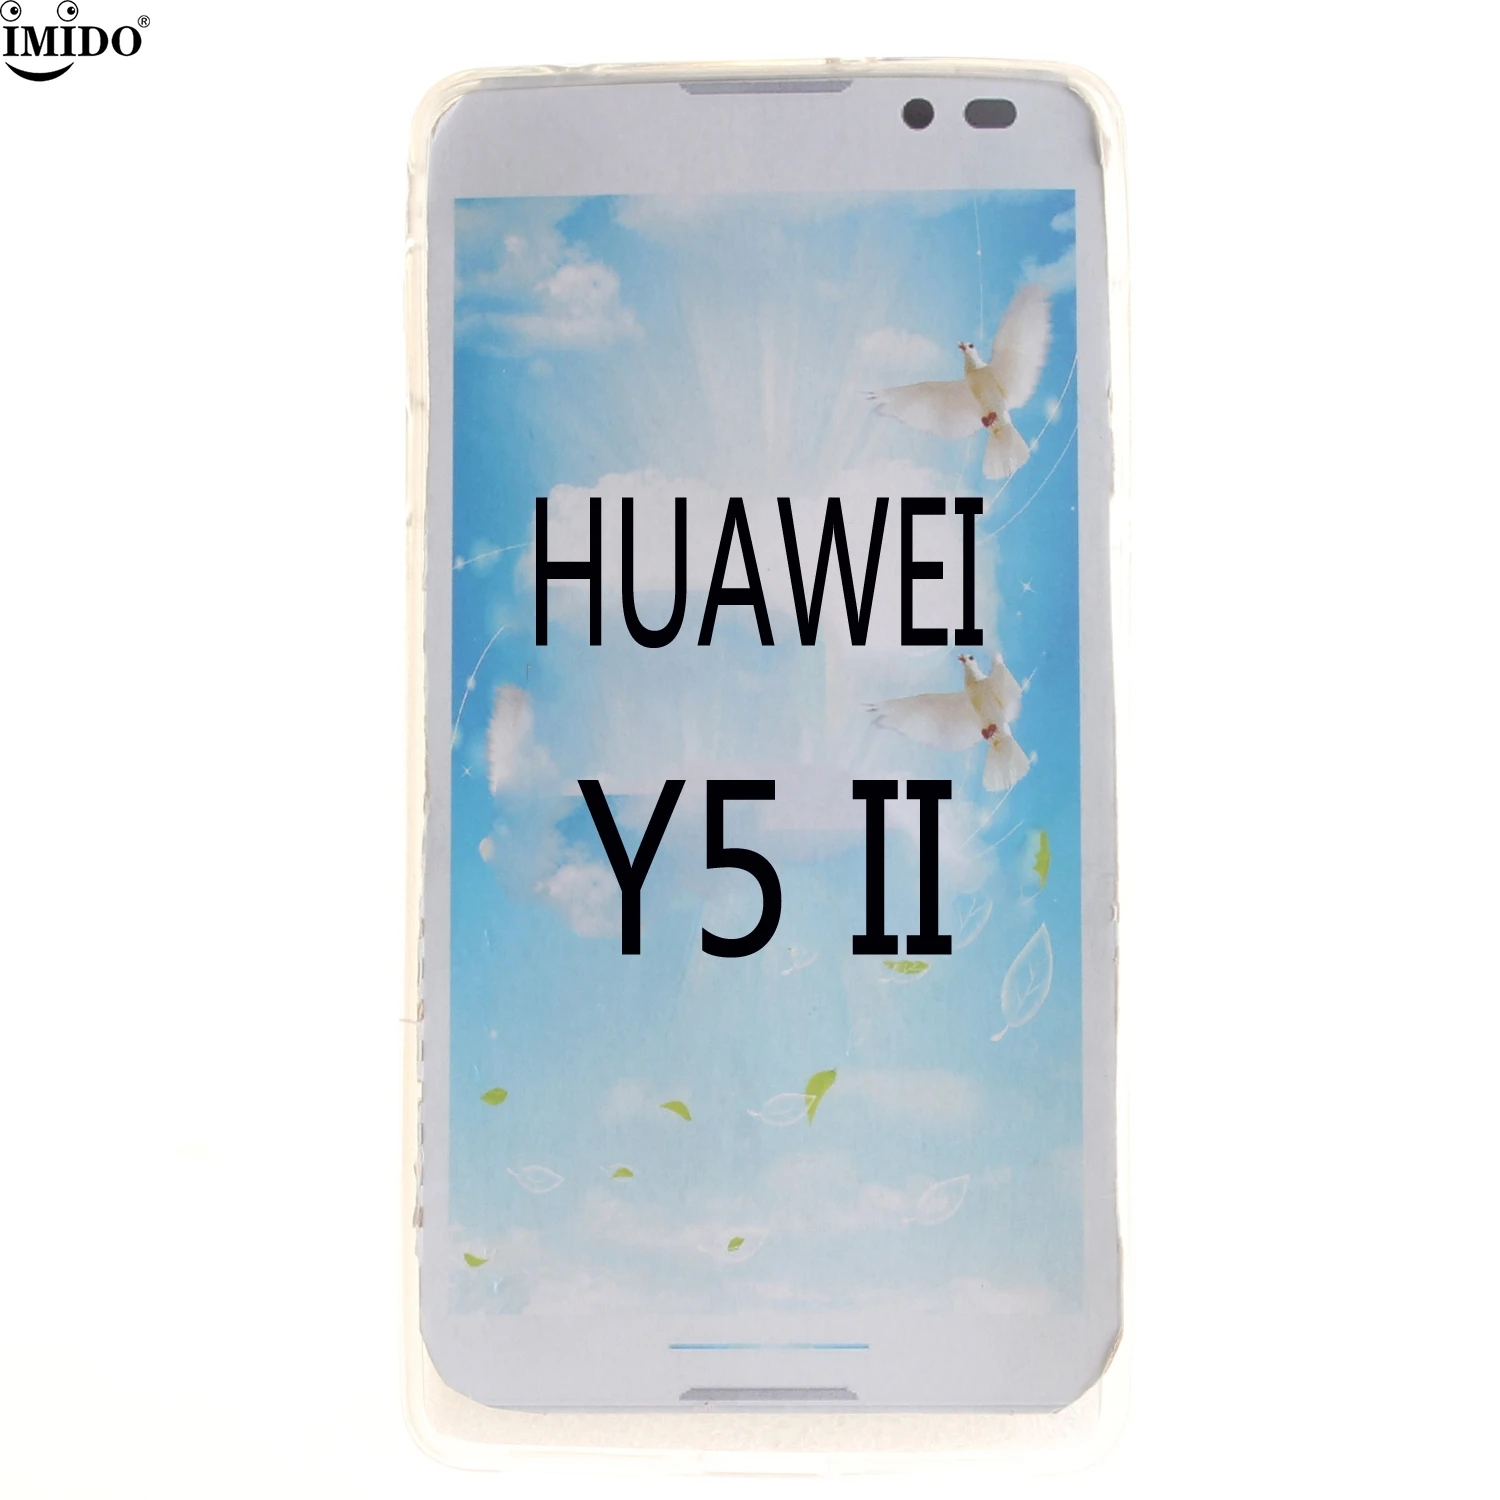 Huawei y52 case for Coque huawei y5iiCUN L23 Elastic TPU Case For Capa  huawei y5 ii mobile cases 5.0" huawei cun l01 y52 cover|case 5|case forcase  case - AliExpress